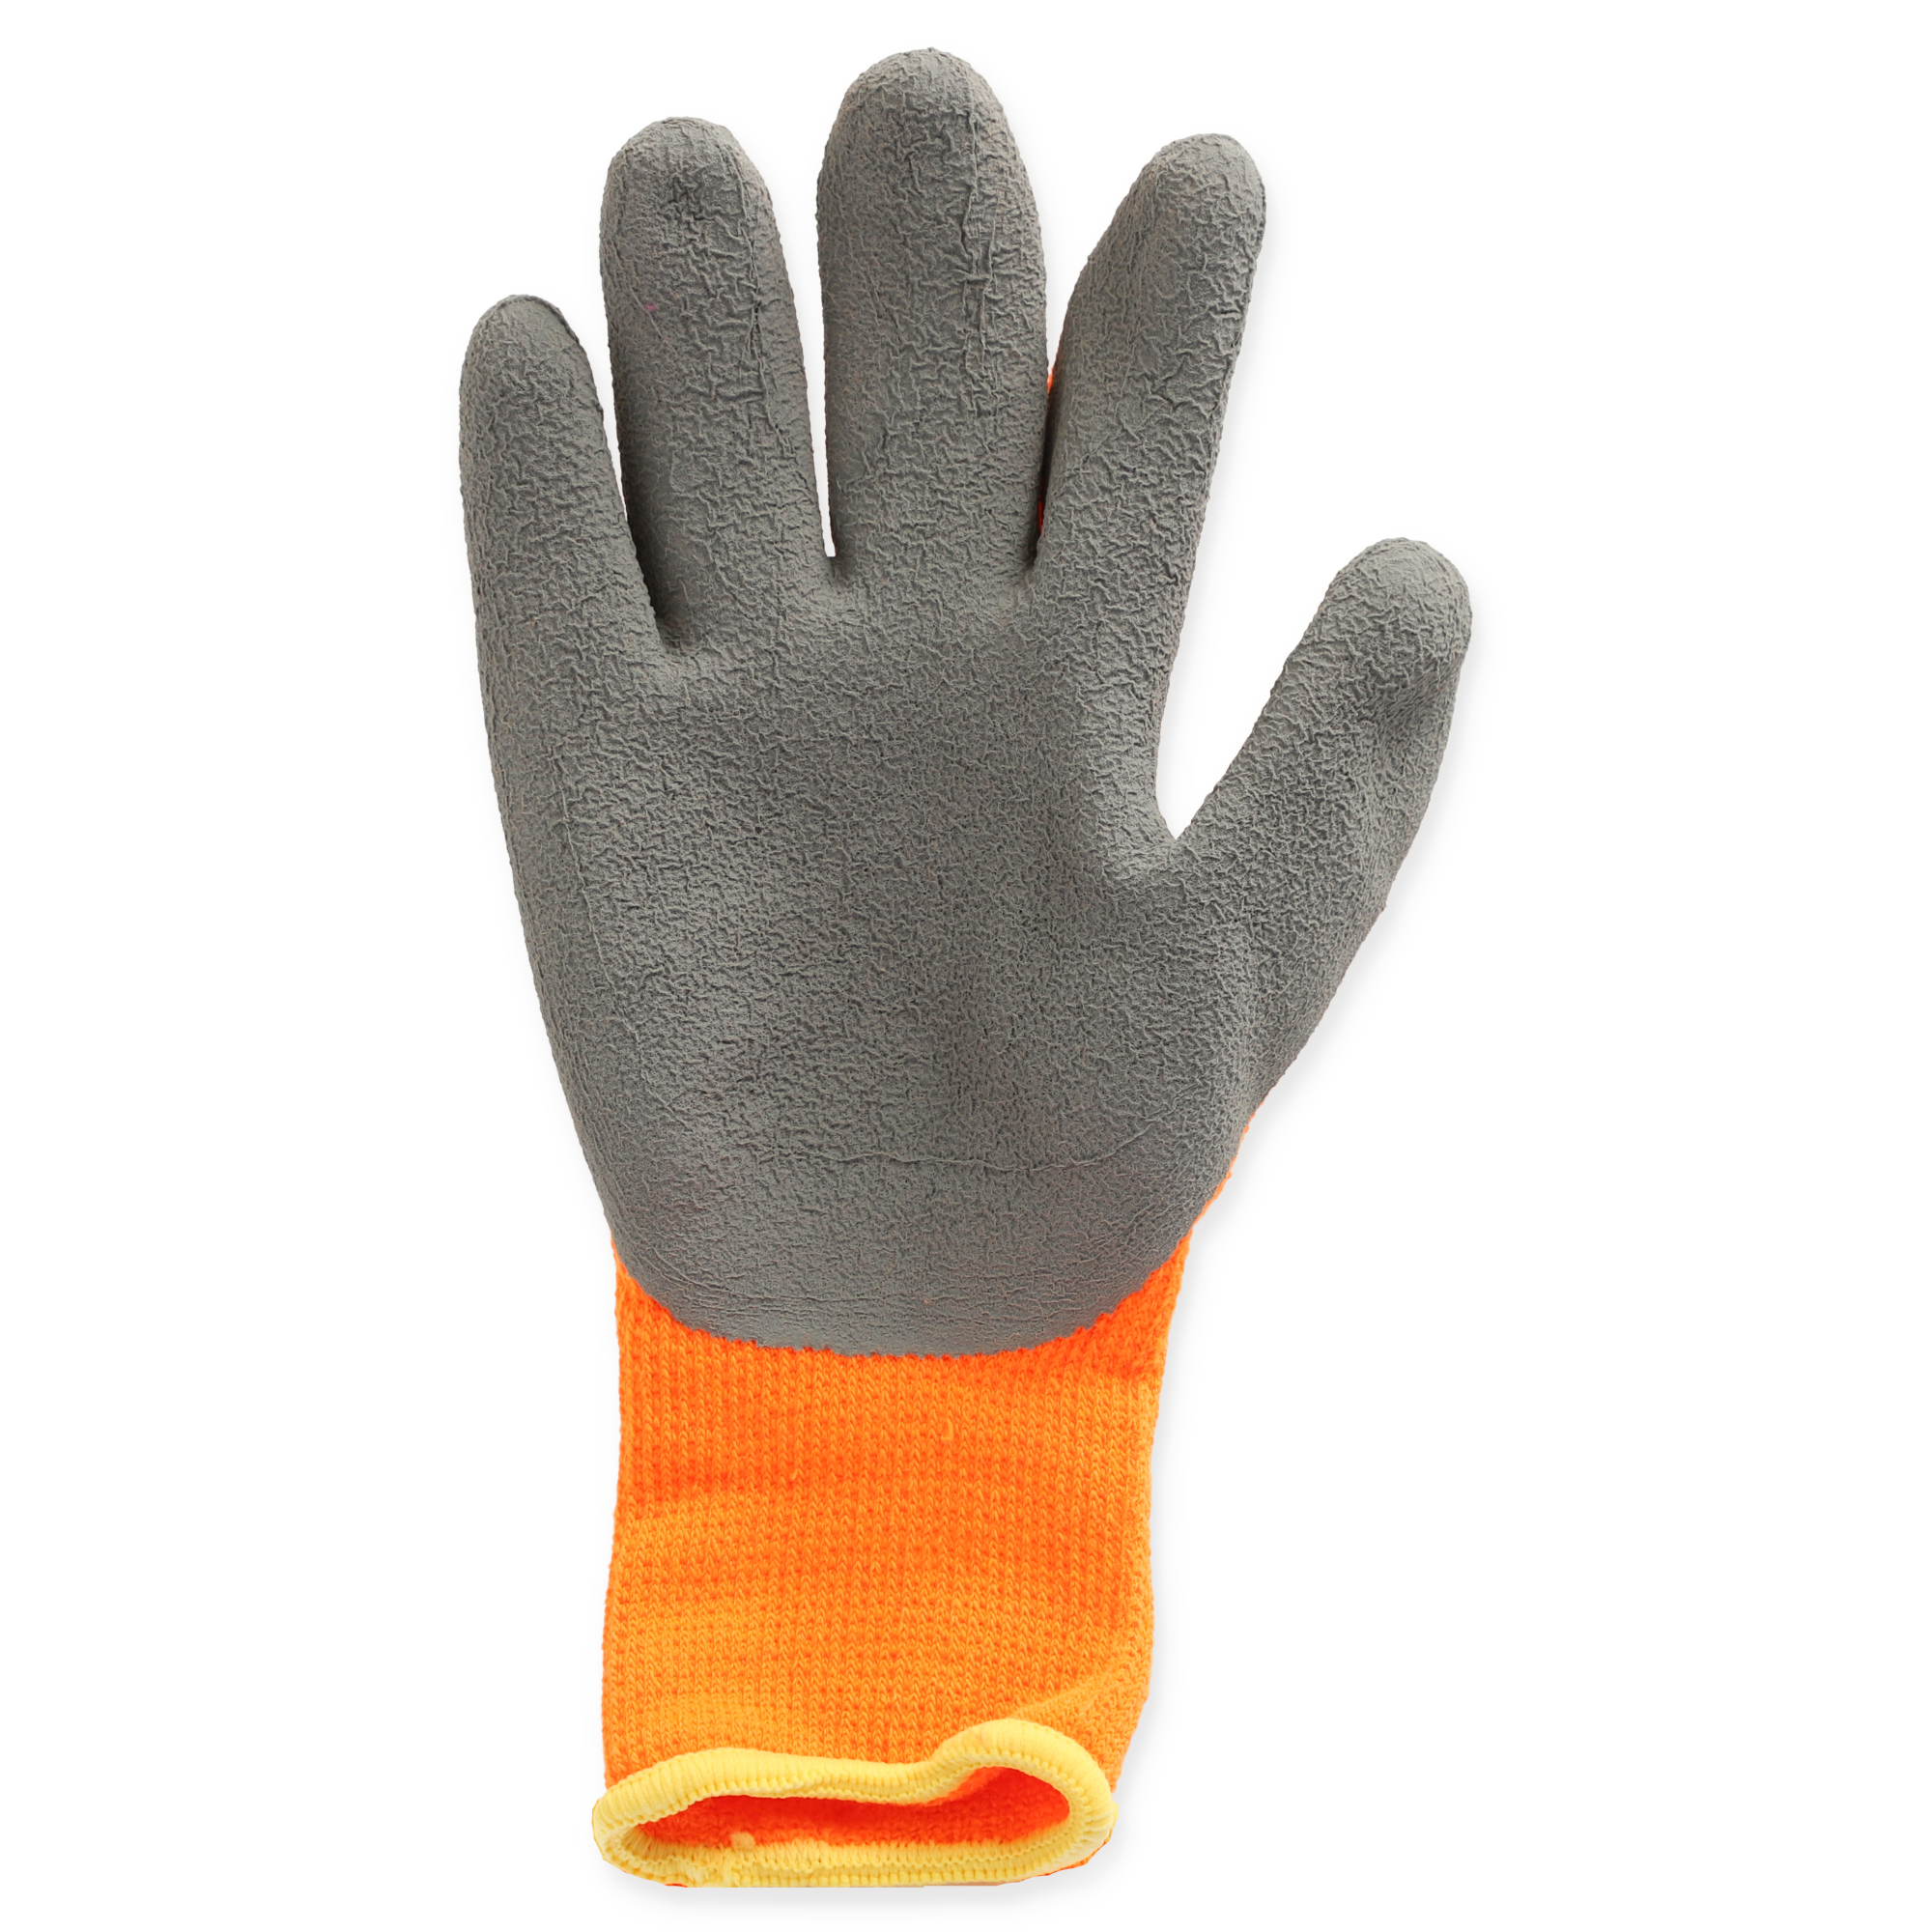 Handschuhe 'Basic 3005' orange Gr. 8 + product picture